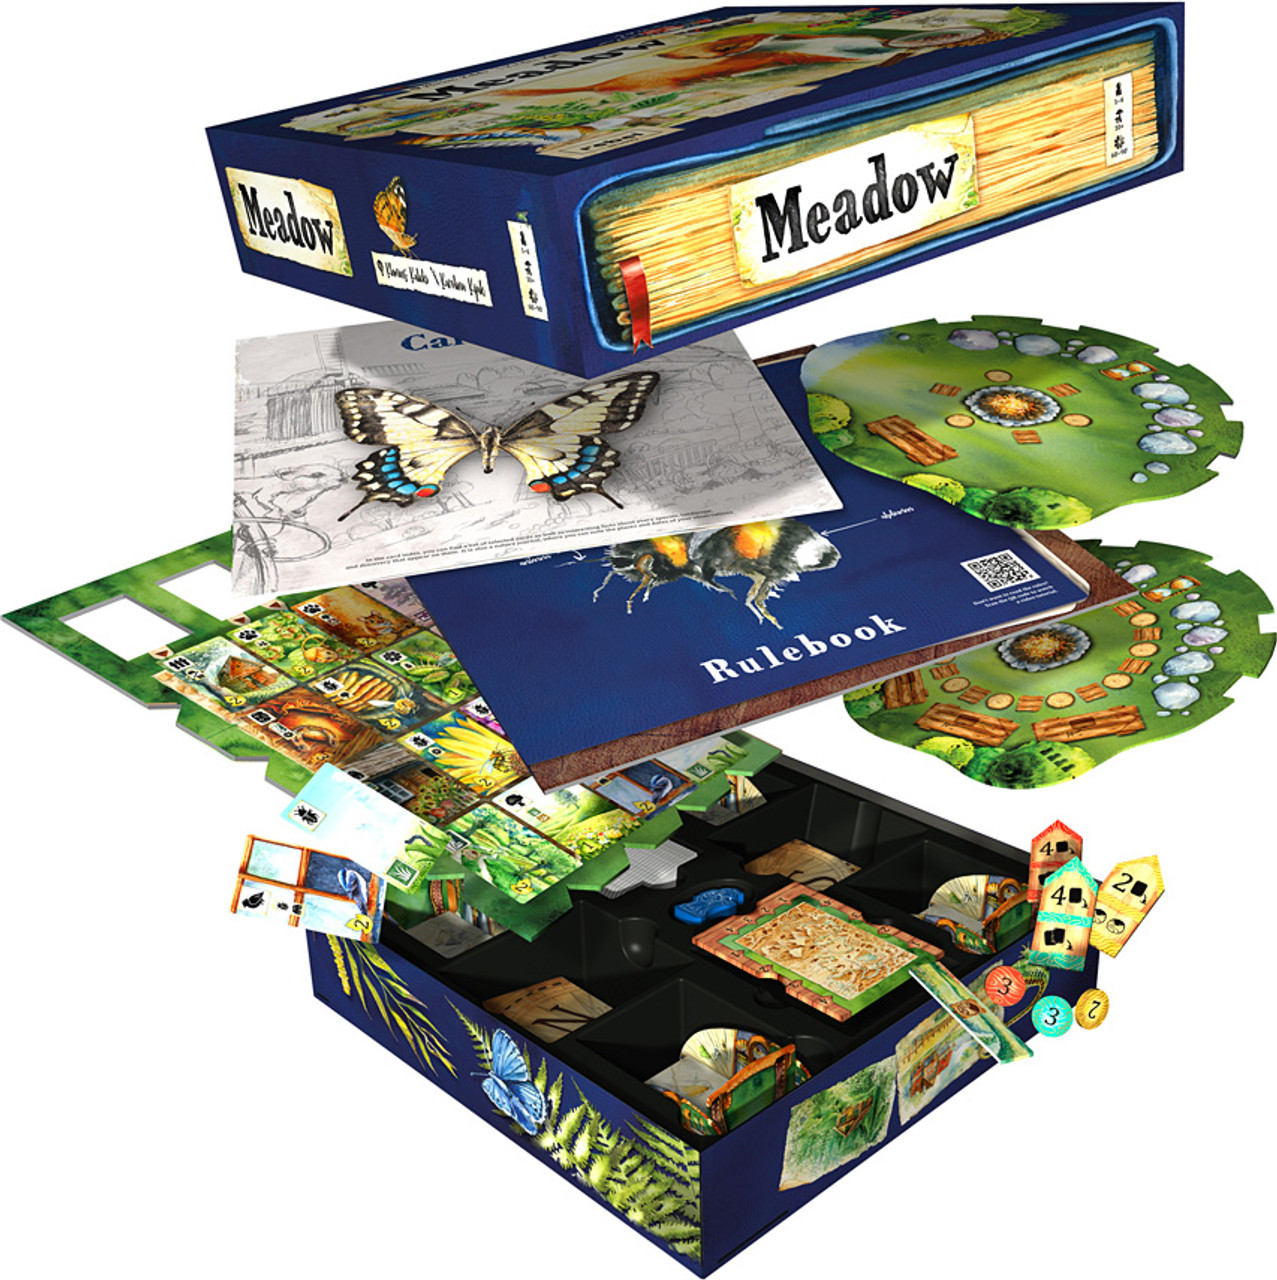 Meadow Board Game 4